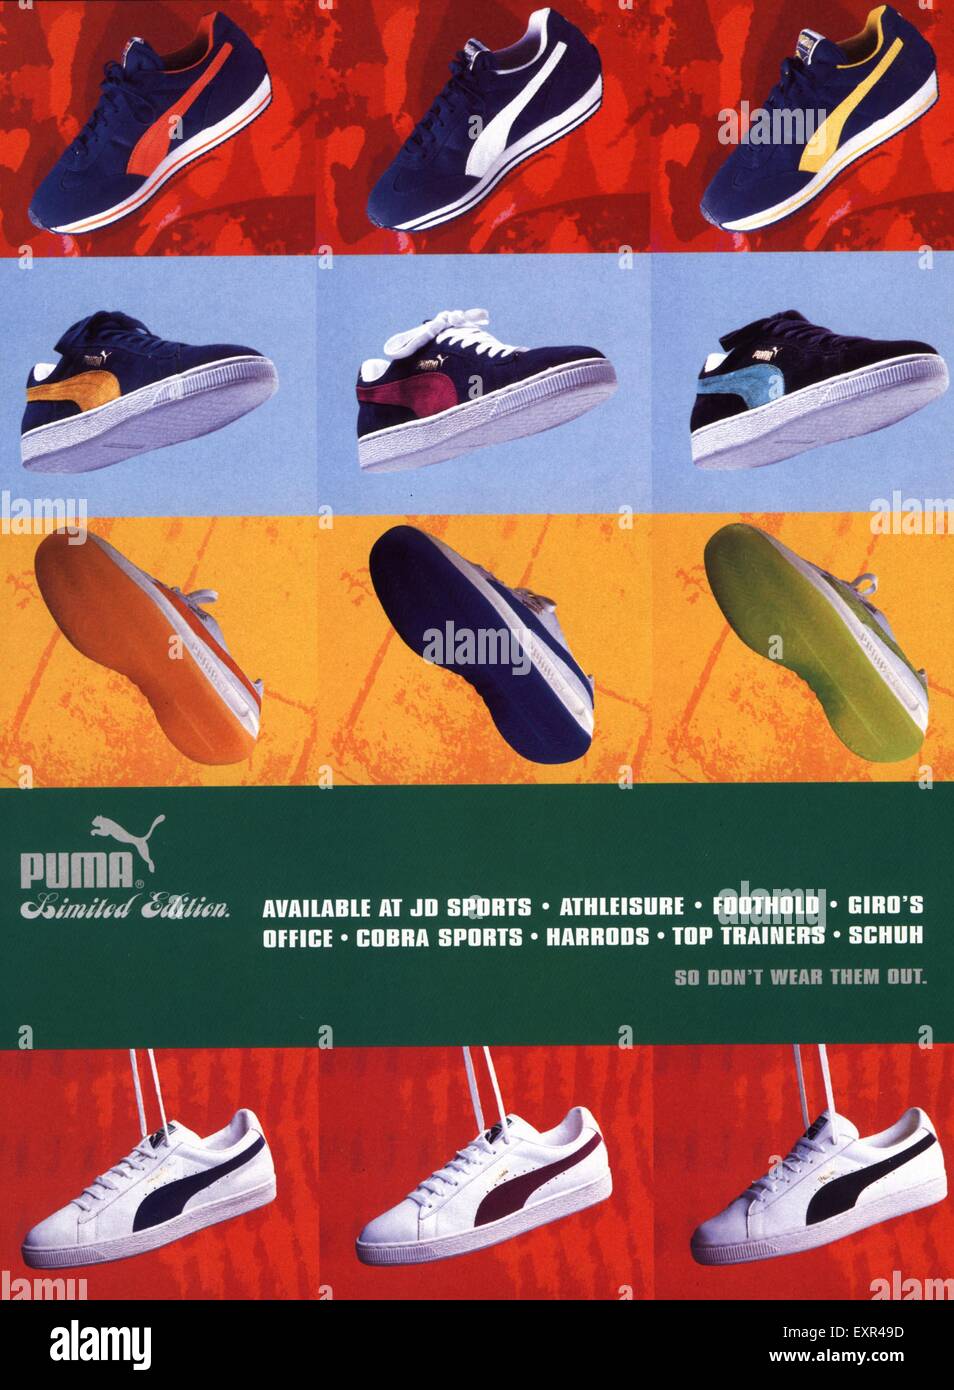 UK Puma Magazine Advert Stock Photo 